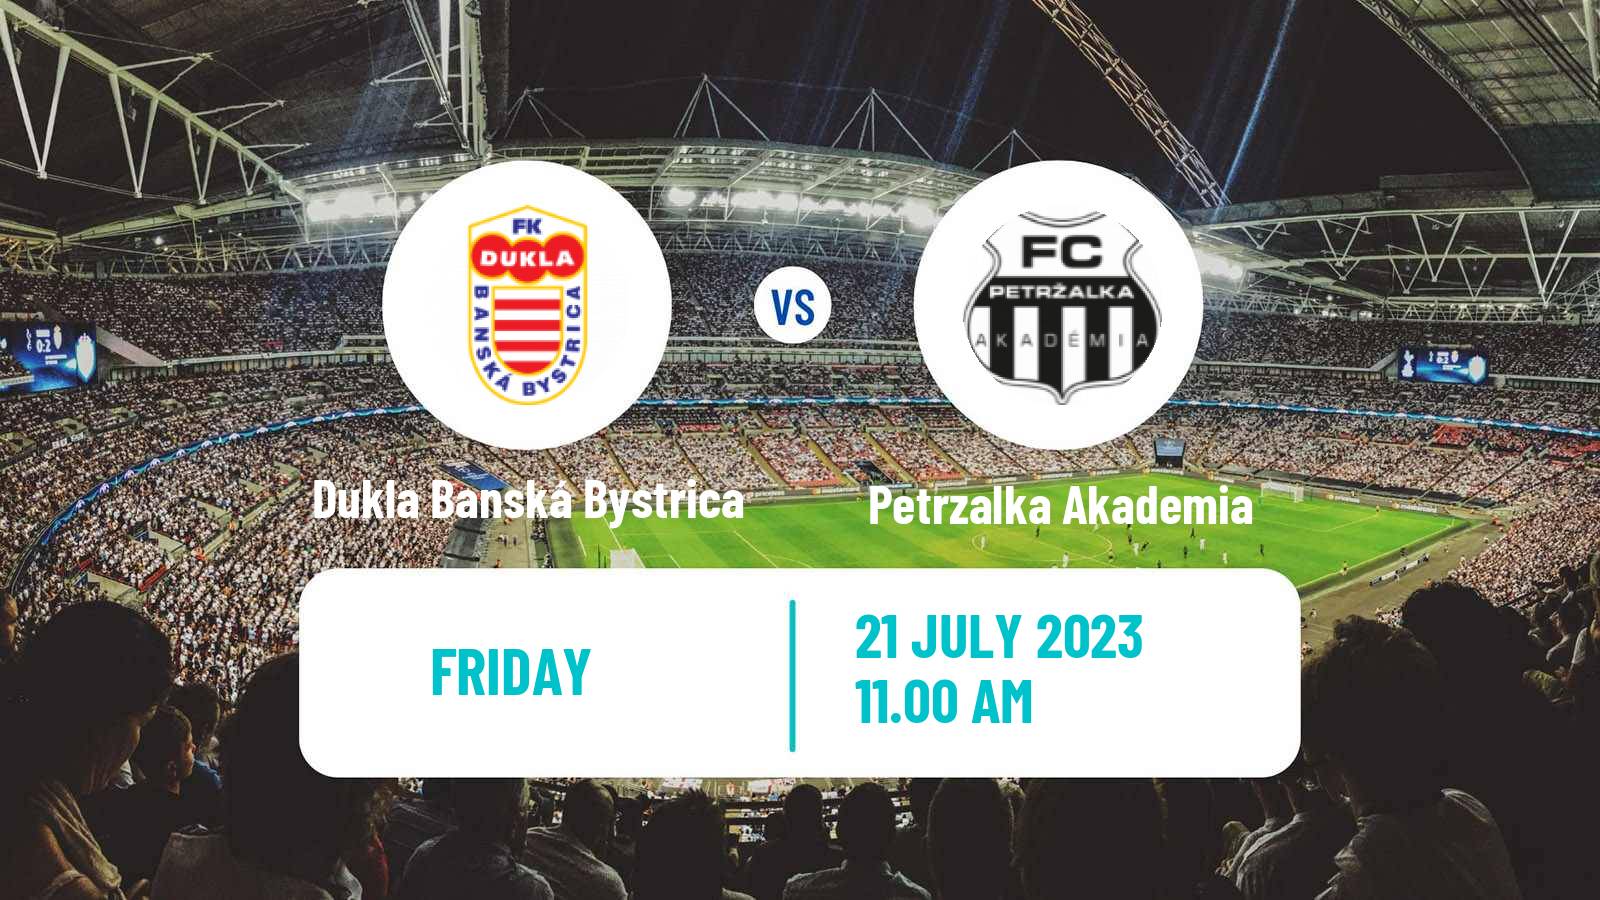 Soccer Club Friendly Dukla Banská Bystrica - Petrzalka Akademia